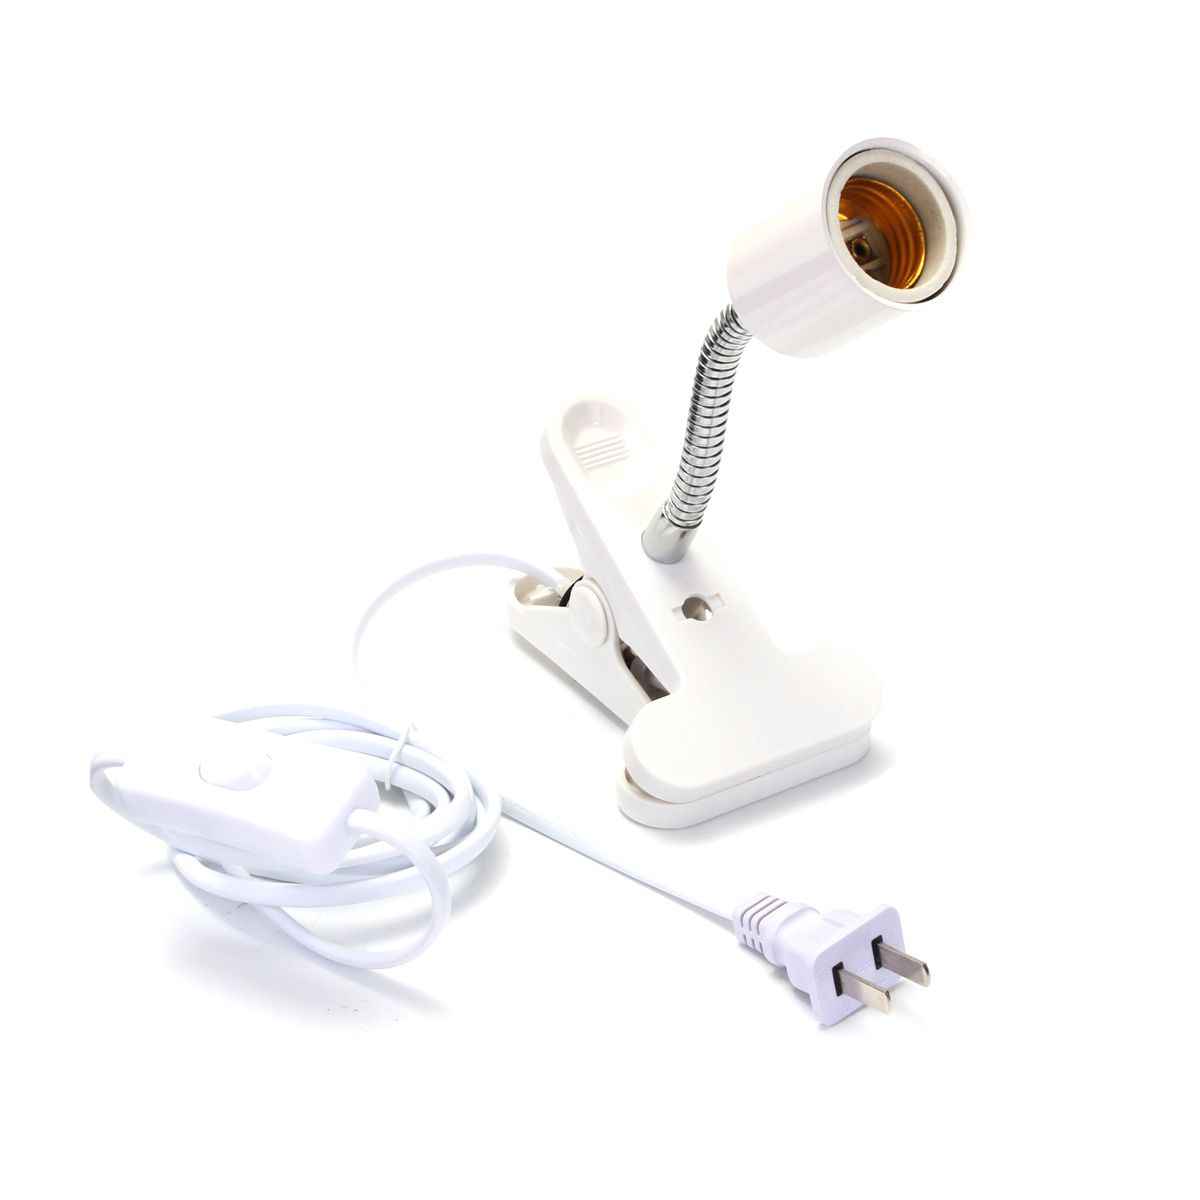 10CM-E27-Flexible-Pet-LED-Light-Lamp-Bulb-Adapter-Holder-Socket-with-Clip-On-Off-Switch-EU-US-Plug-1309591